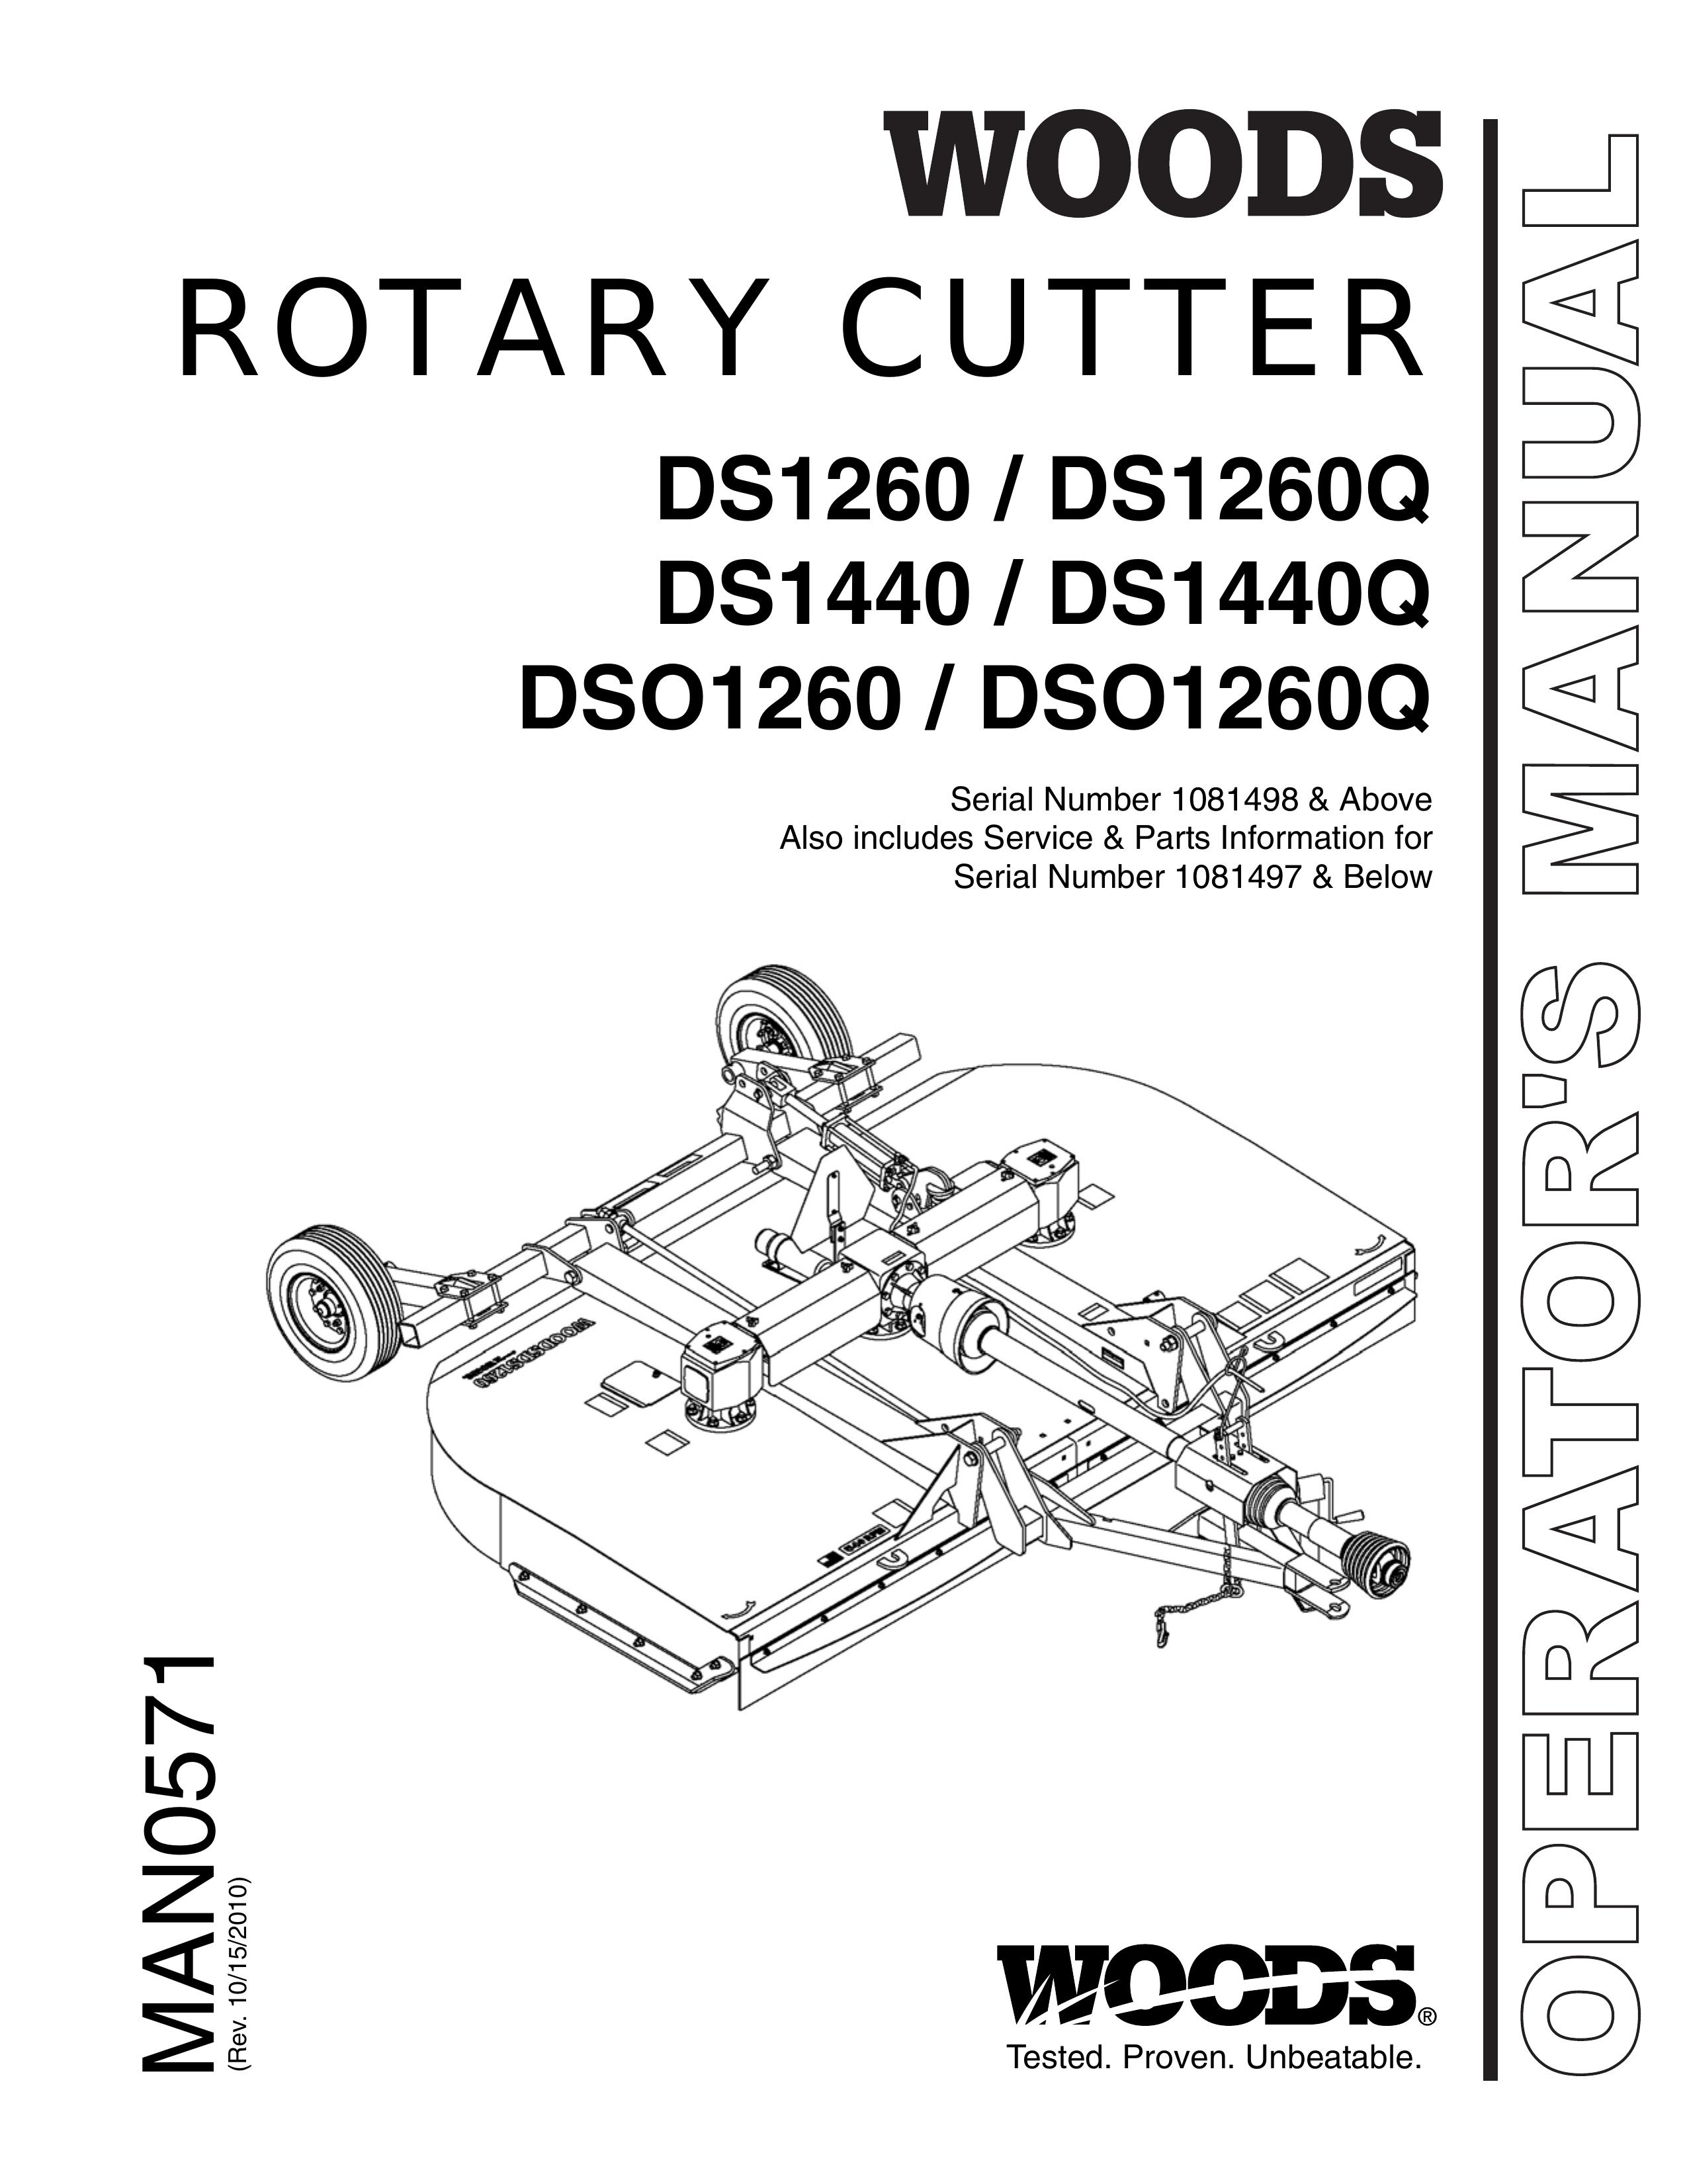 Woods Equipment DS1440 Brush Cutter User Manual